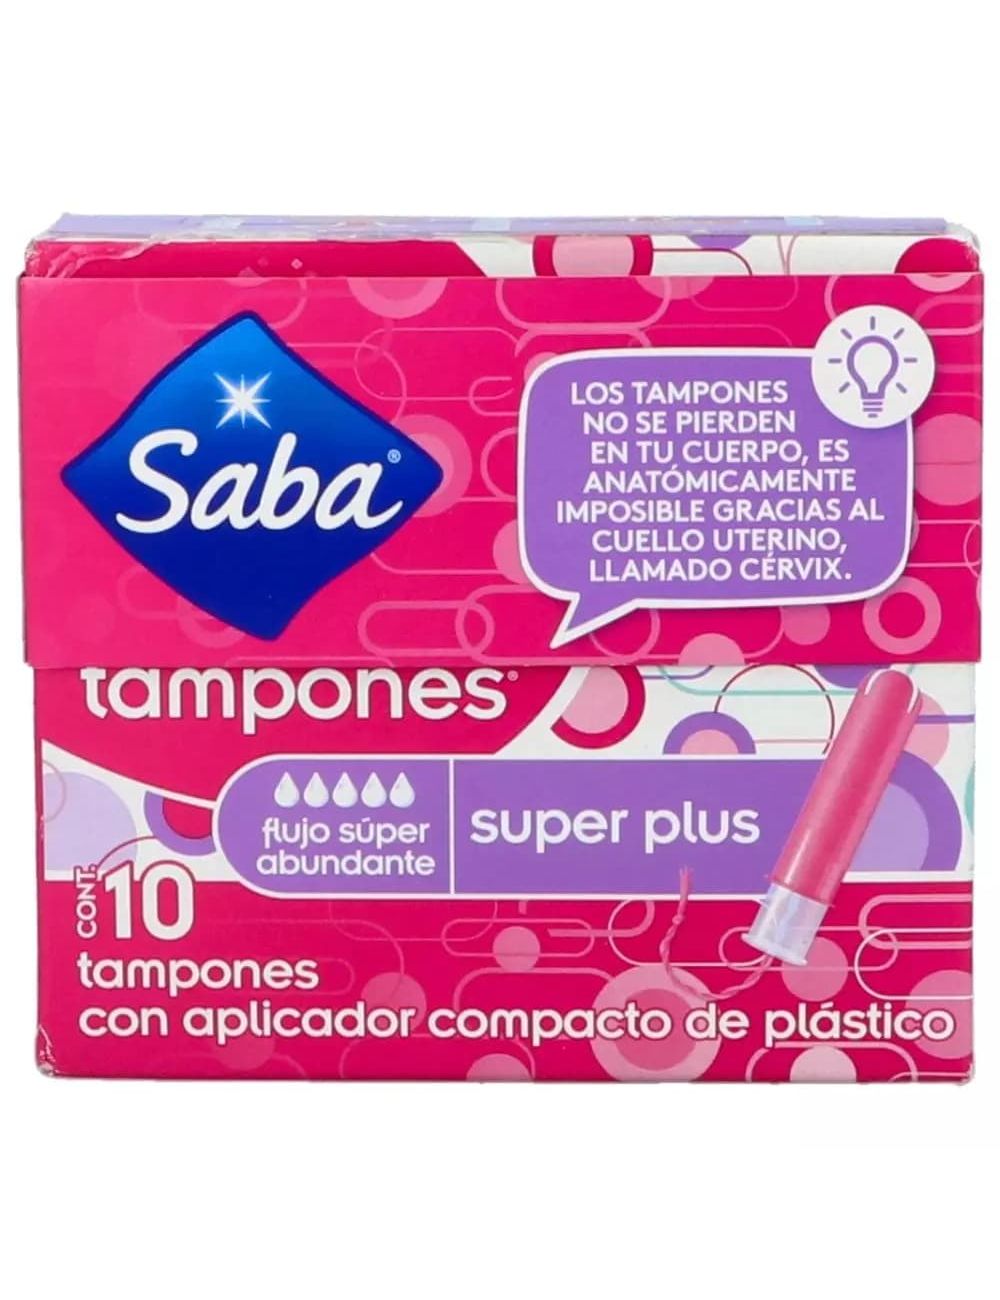 Precio Tampones Saba compac superplus | Farmalisto MX